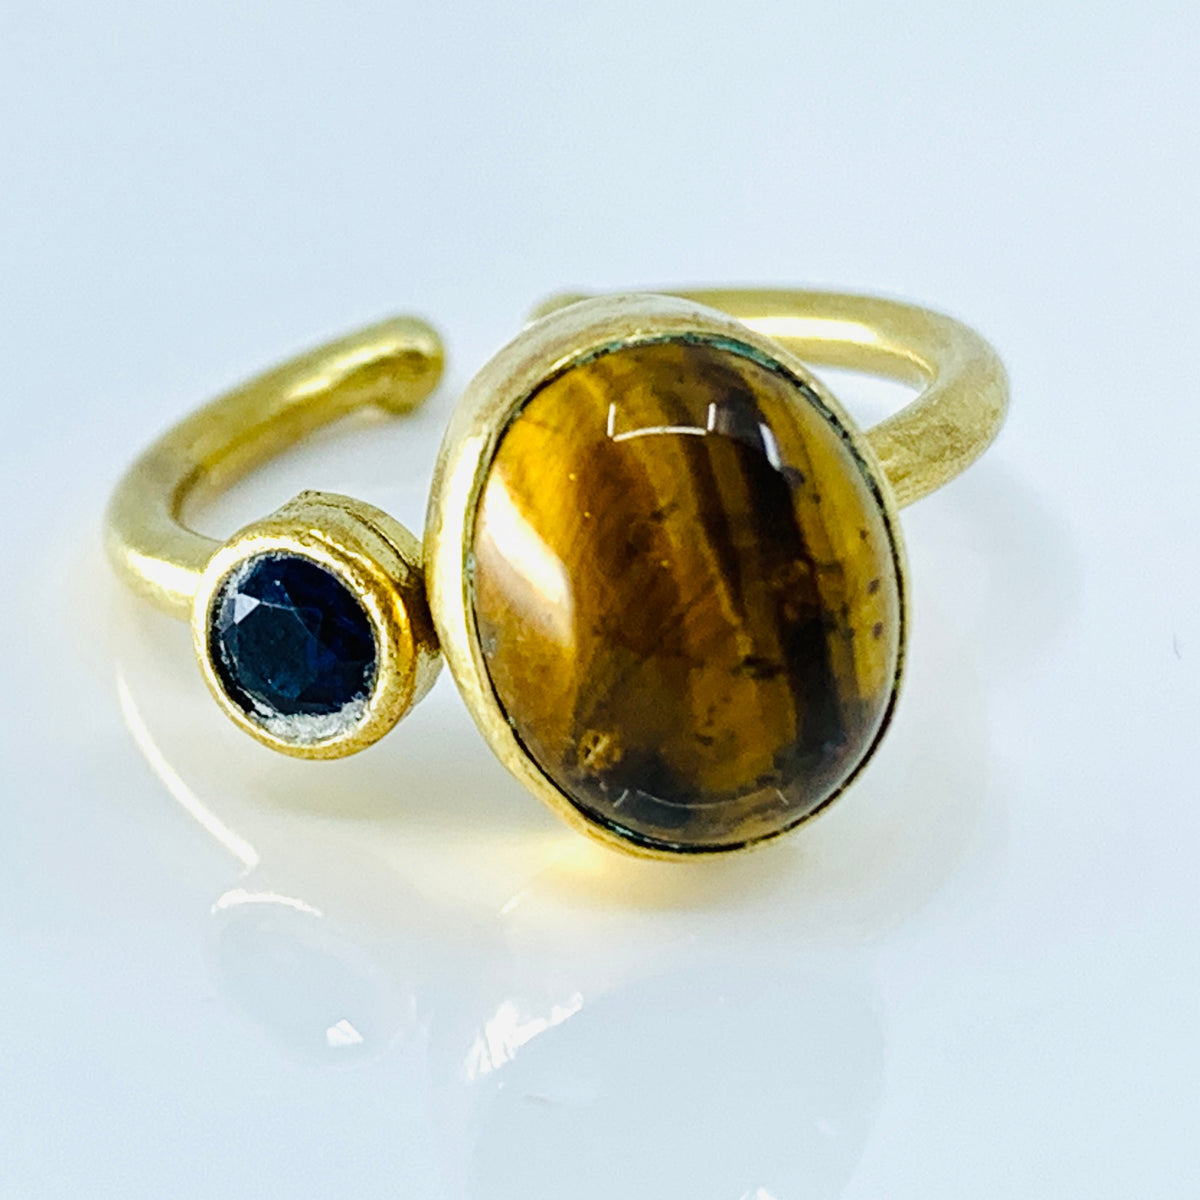 Turkish Brass Adjustable Ring 7 Jewelry Ikat Jewelry 